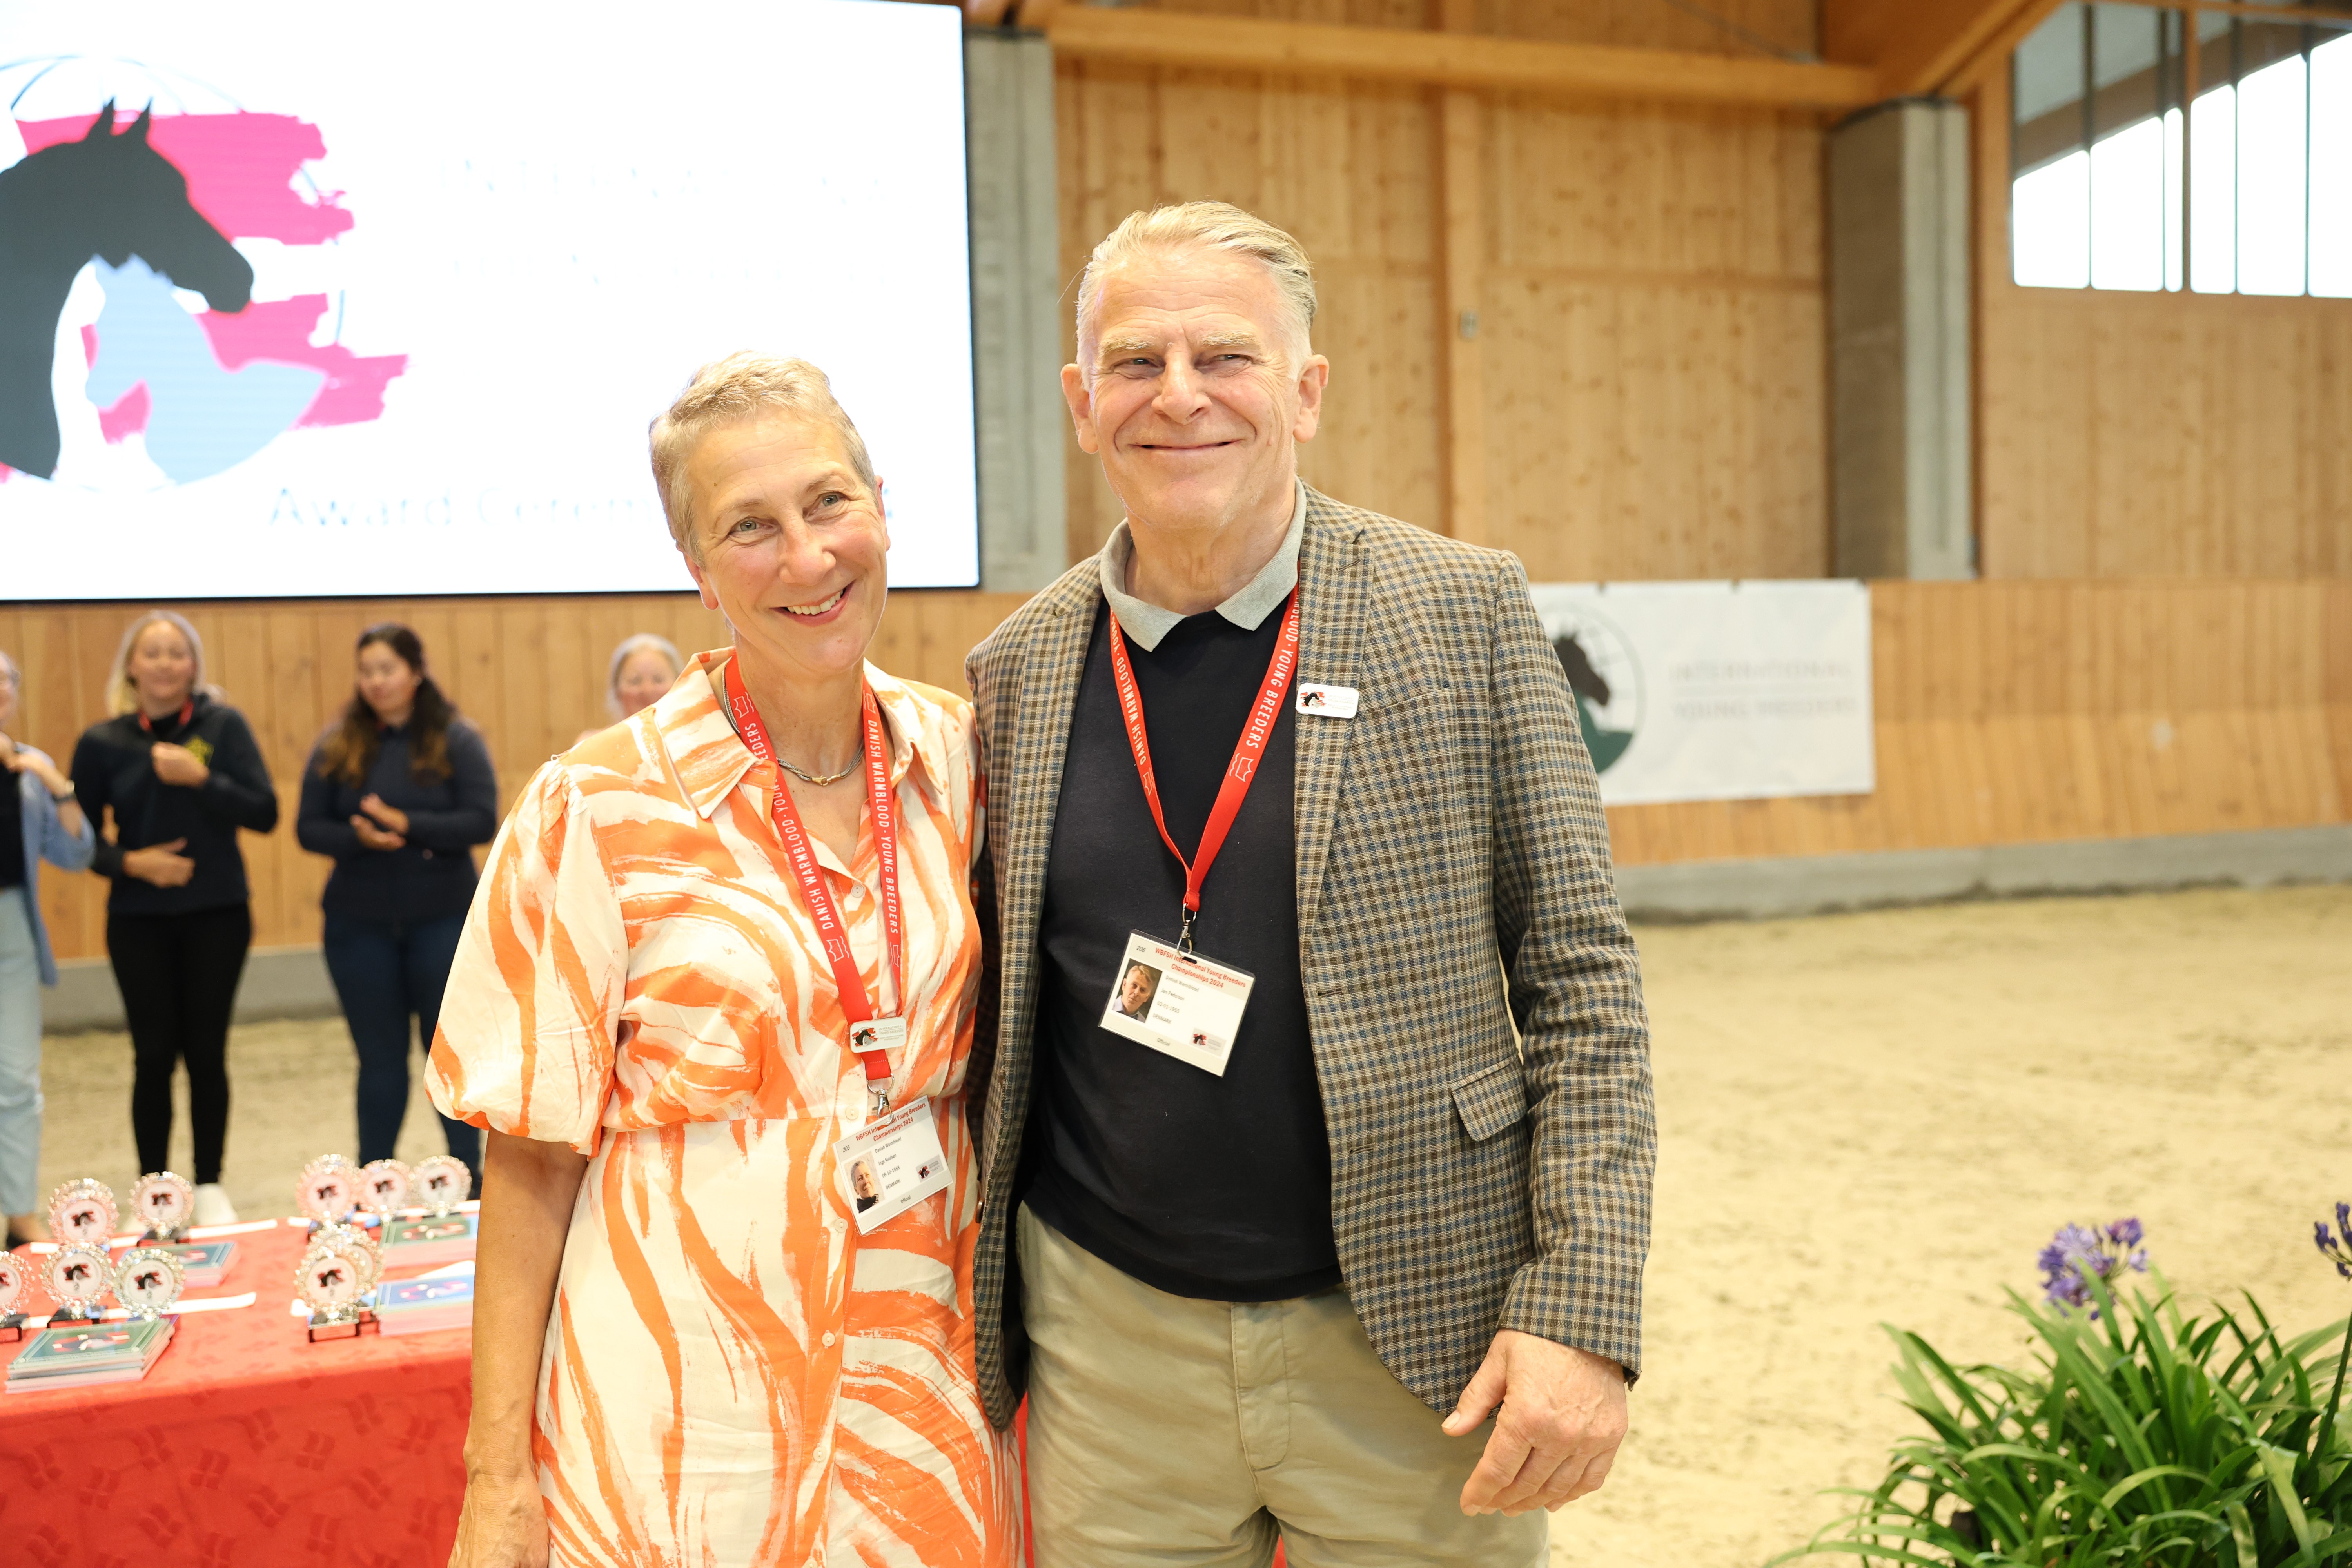 Photo 4: IYB President Inge Madsen and WBFSH President Jan Pedersen. Photo: Ridehesten.com